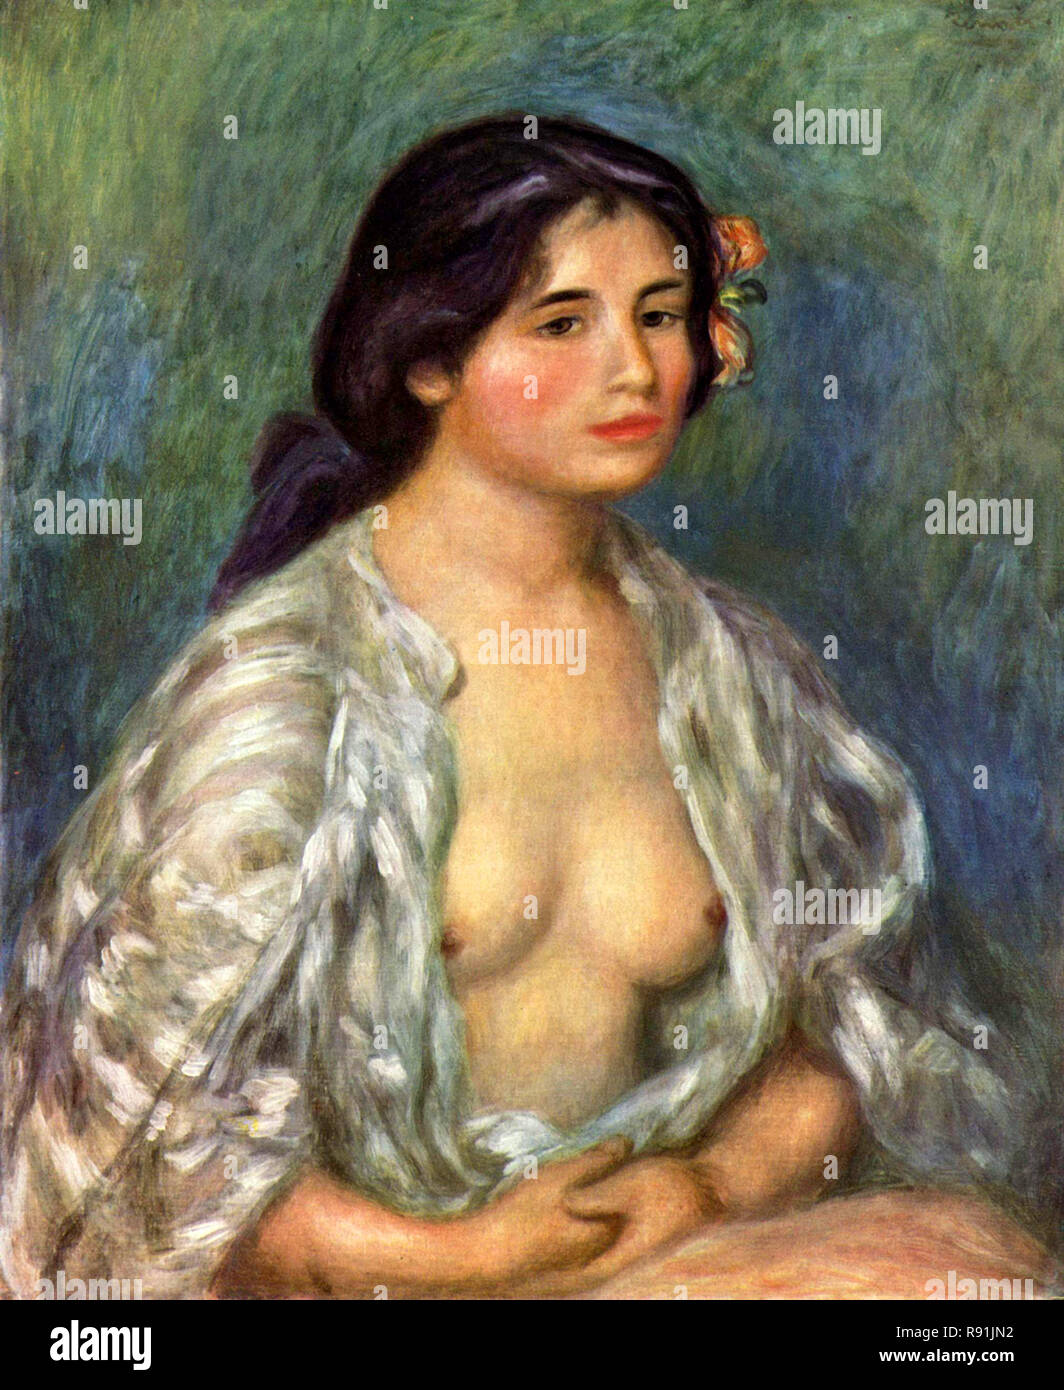 Gabrielle con la blusa abierta, Gabrielle avec la Chemise Ouverte, pintado por el artista impresionista francés Pierre-Auguste Renoir Foto de stock